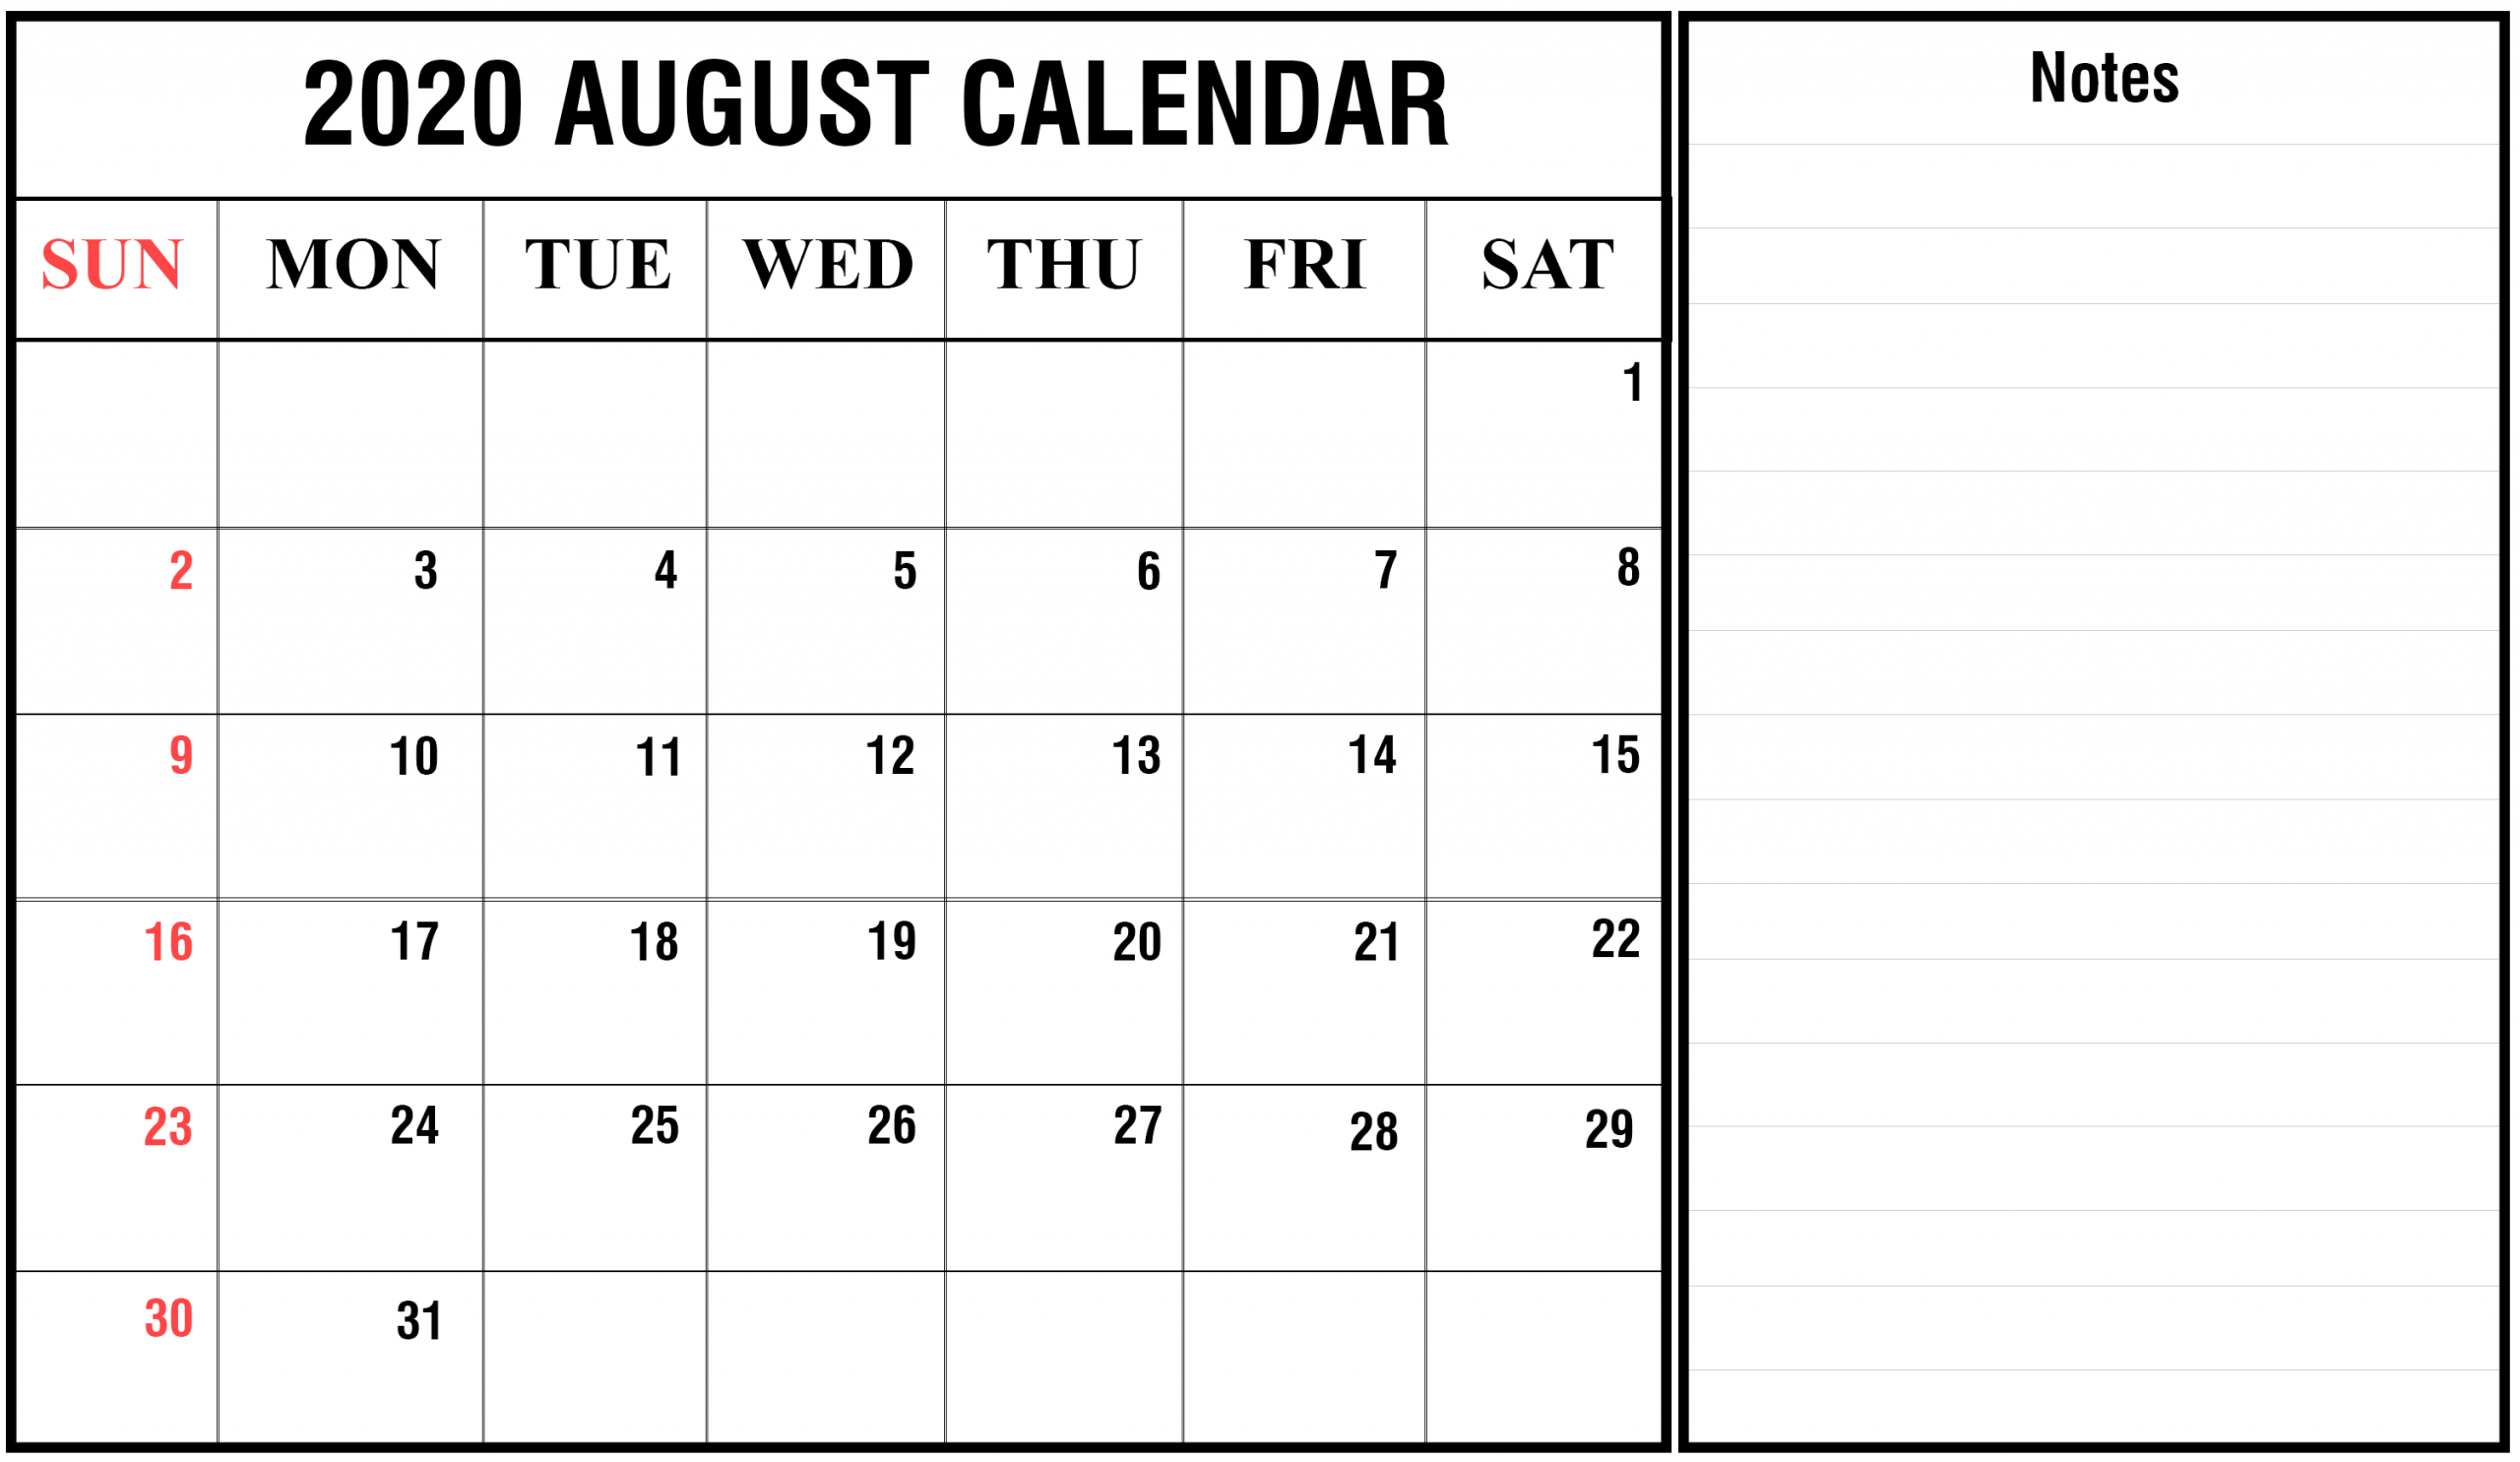 2020 August Calendar With Notes August Calendar